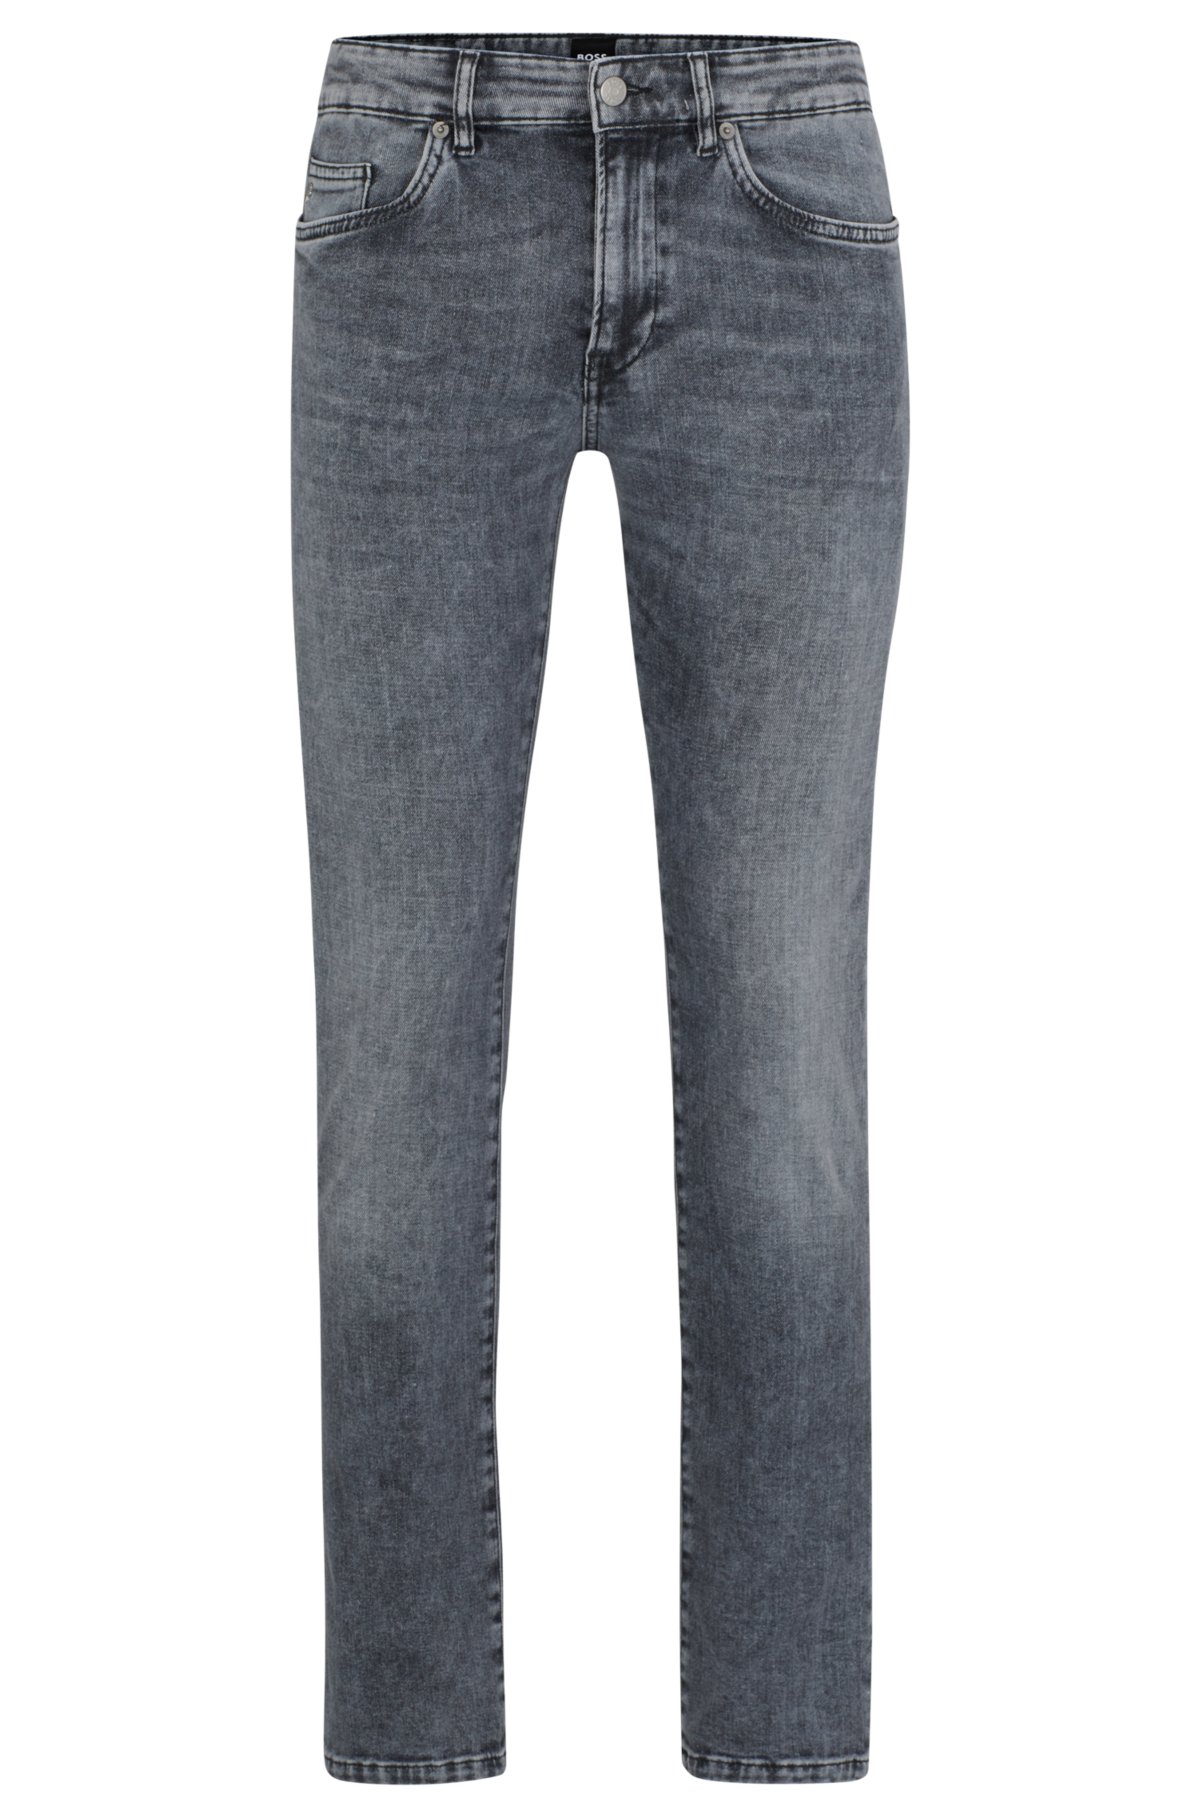 - in Slim-fit denim BOSS Italian gray stretch stonewashed jeans